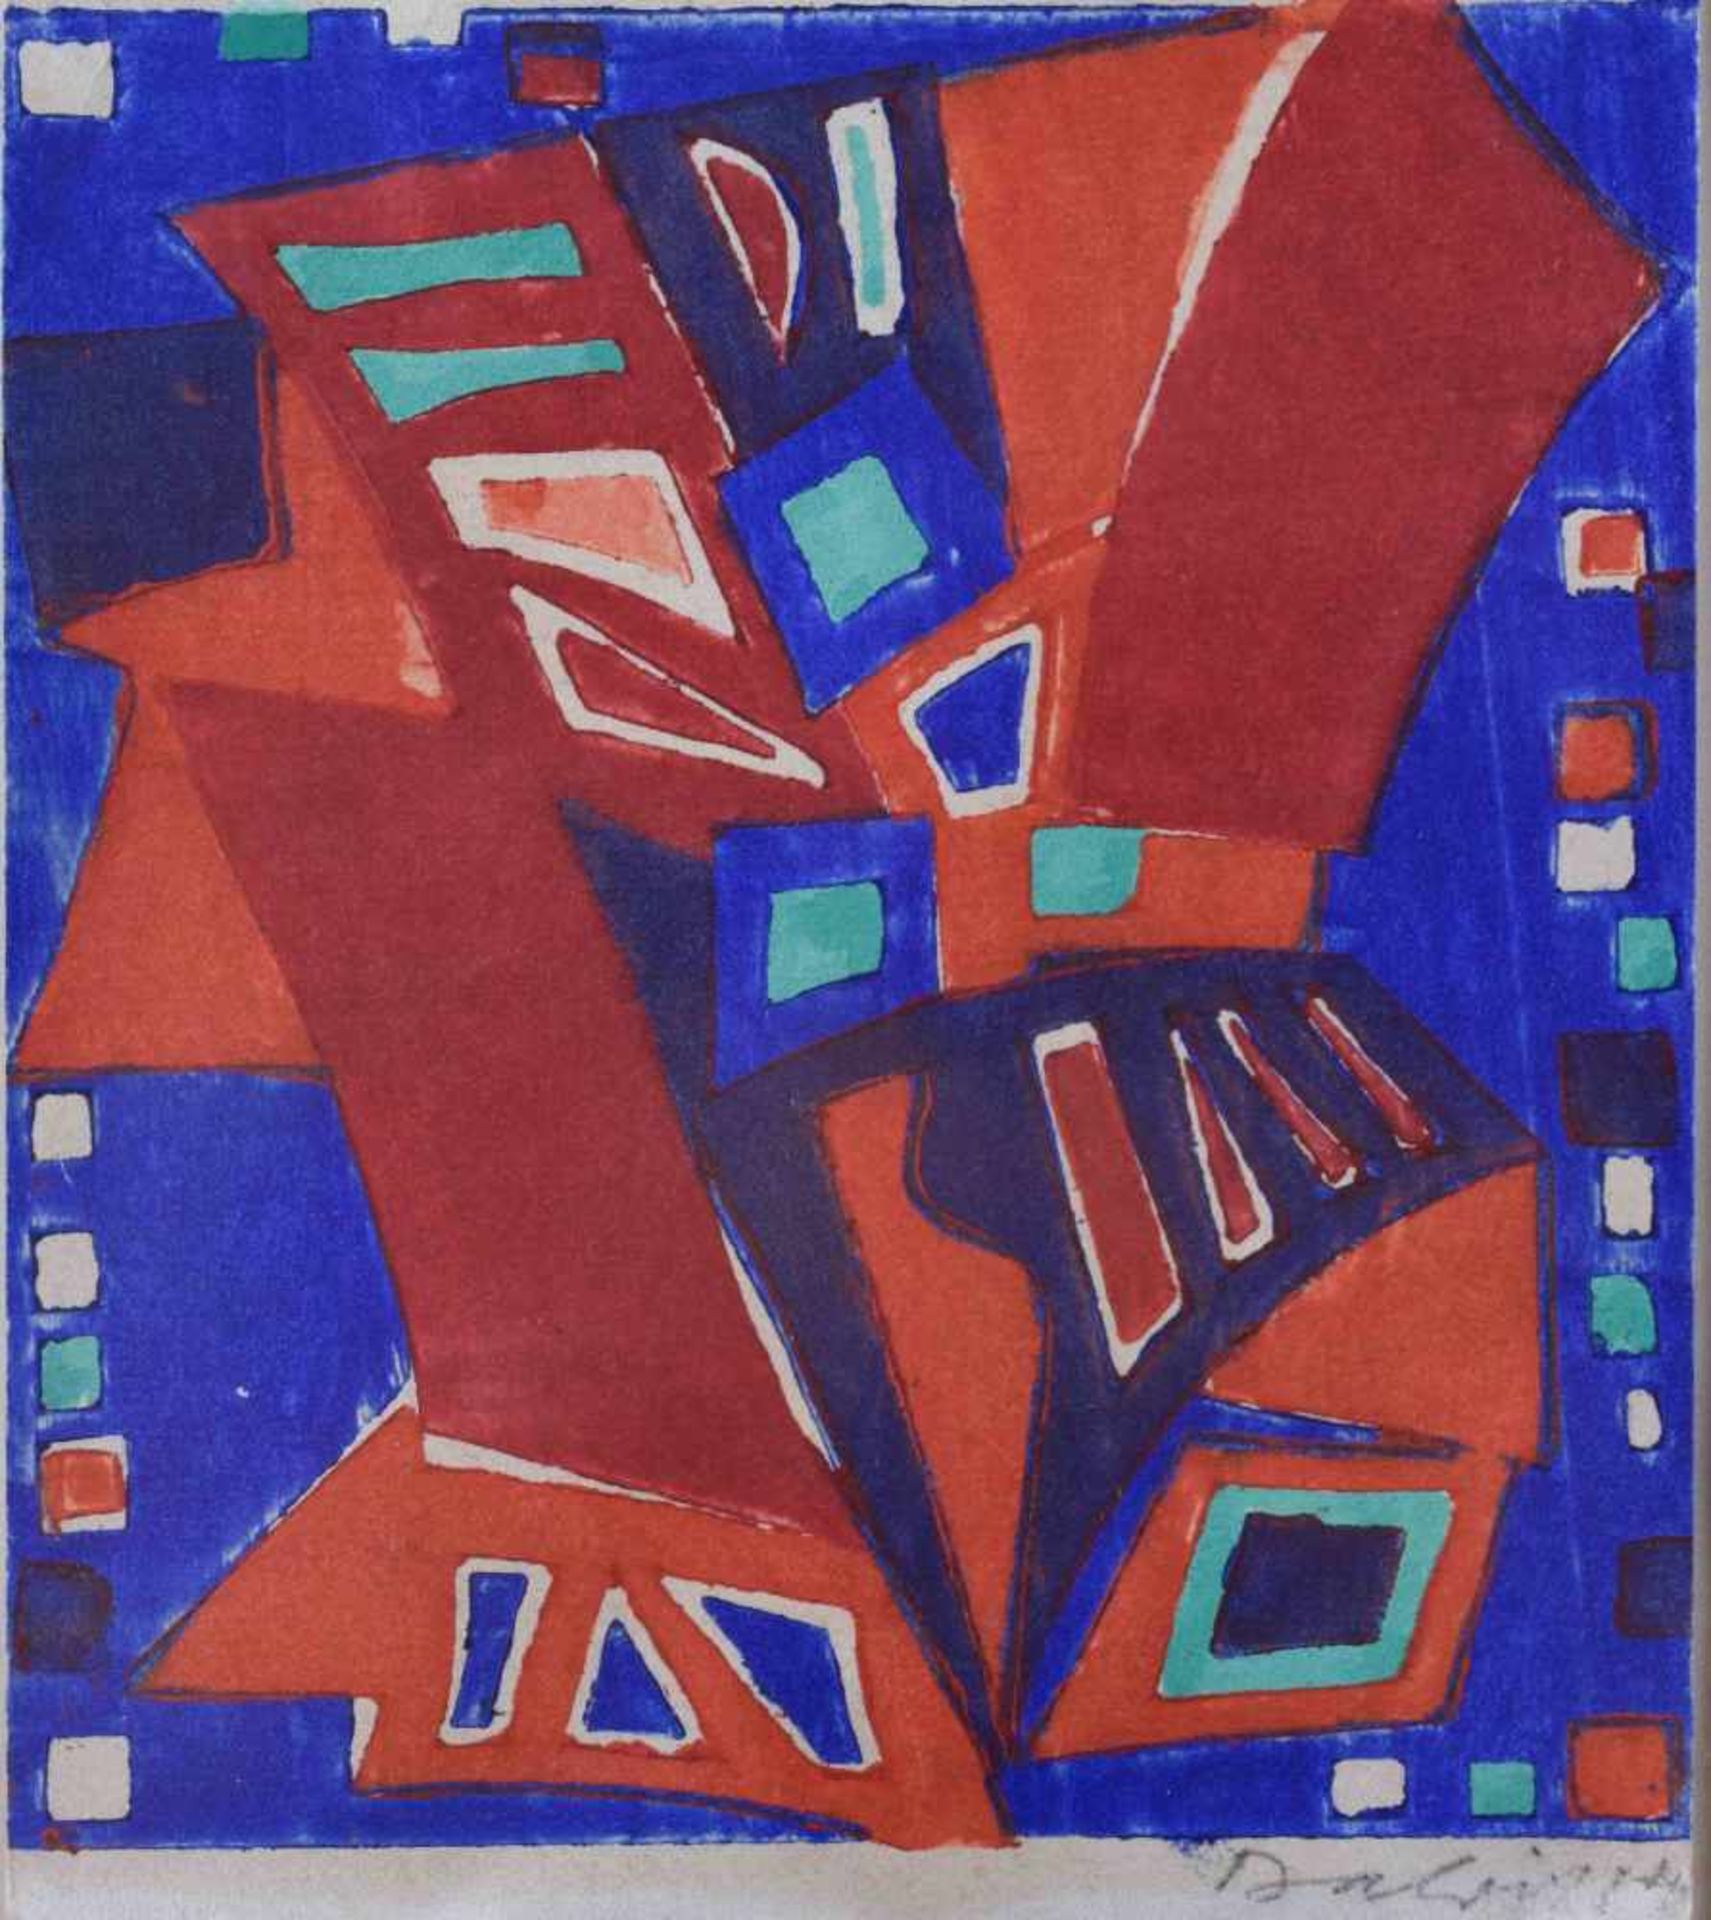 Oskar DALVIT (1911-1975)"Ohne Titel"Grafik-farbiger Linolschnitt, Sichtmaß 15 cm x 13 cm,rechts